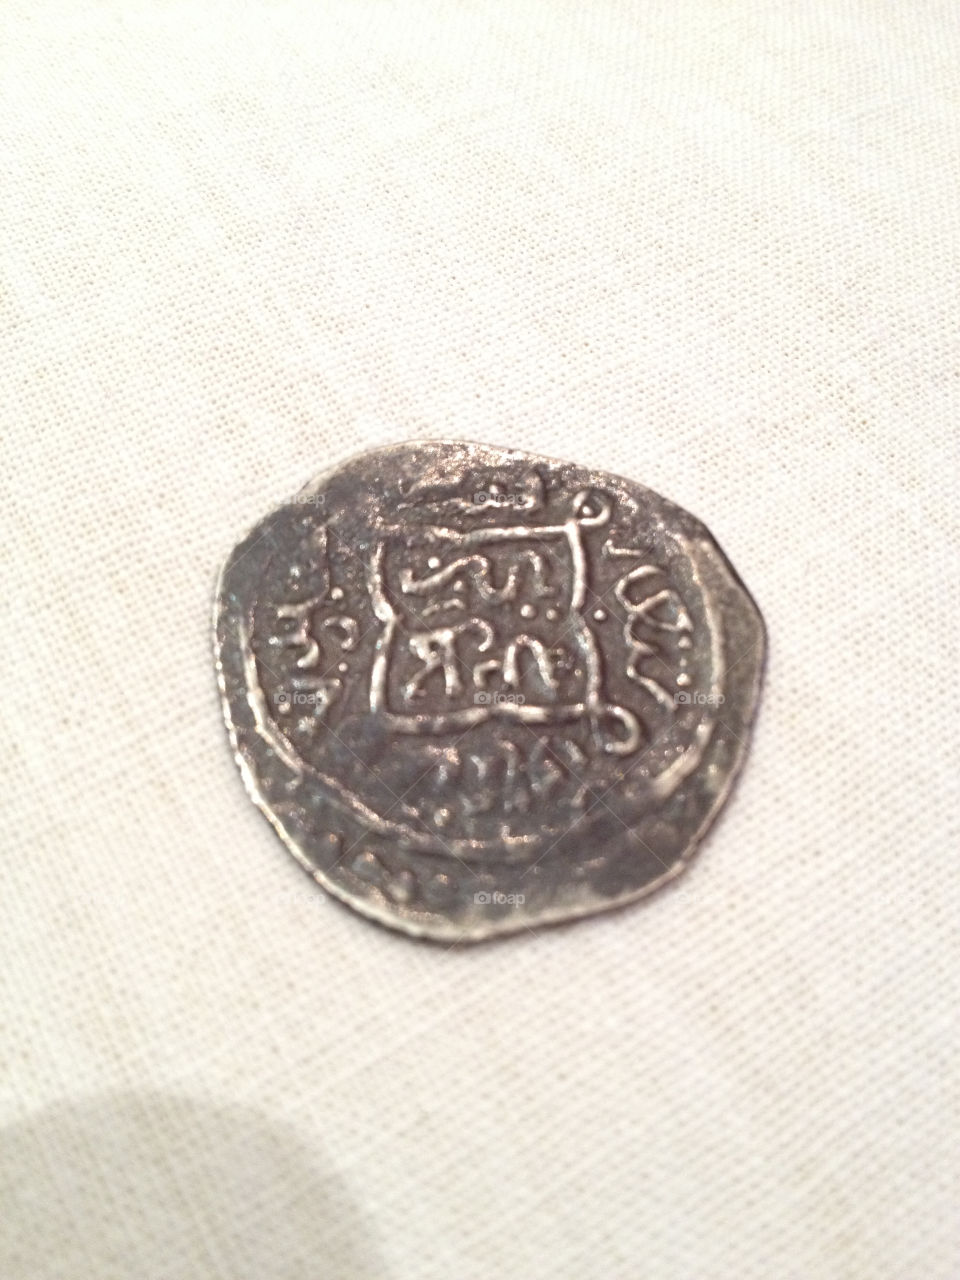 iran old coin by alireza_ooo